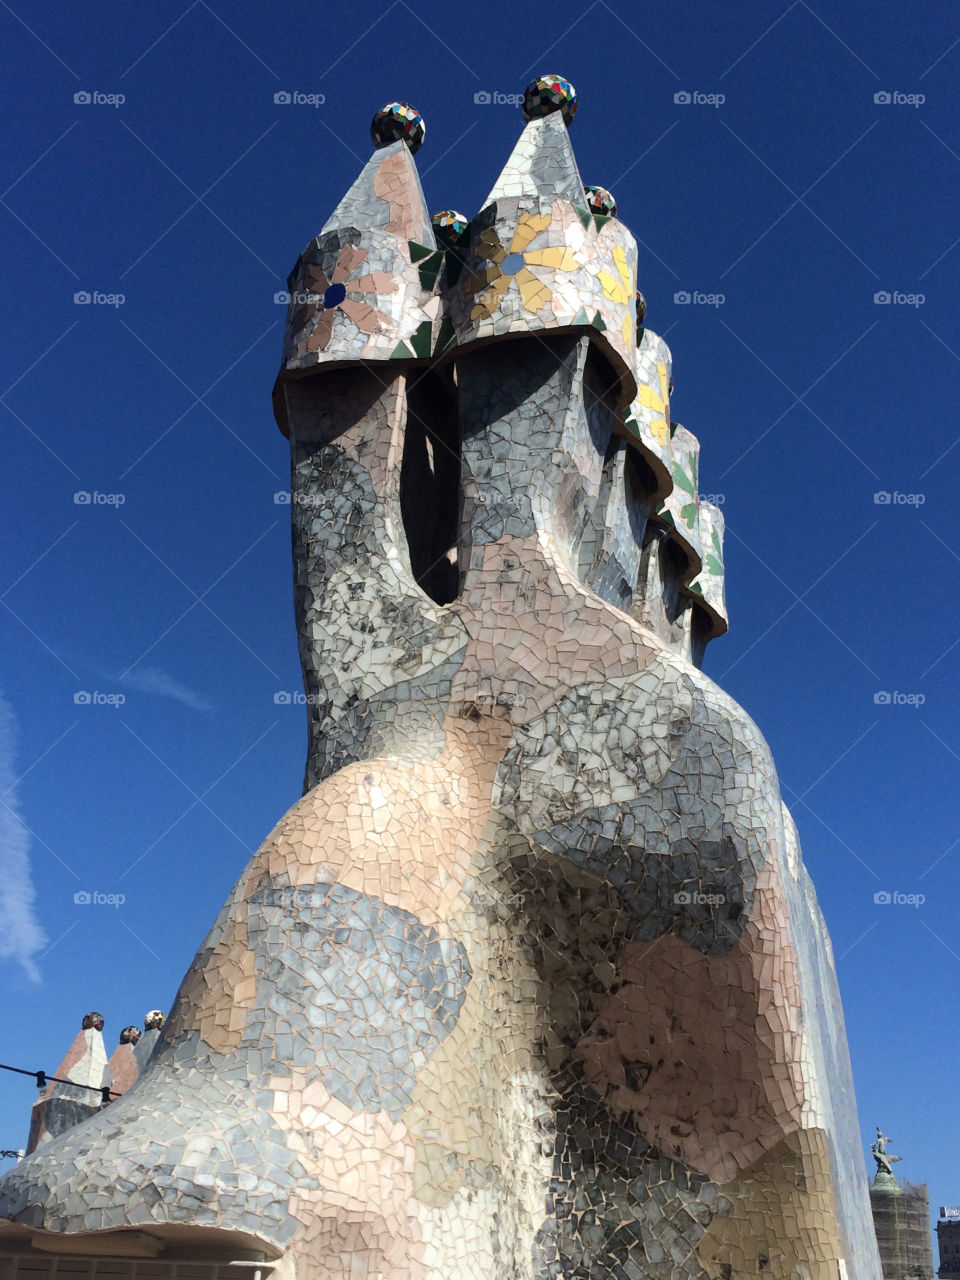 Casa Battlo Chiminea. Galdi Barcelona chimneys sky tiles modern art architecture roof top